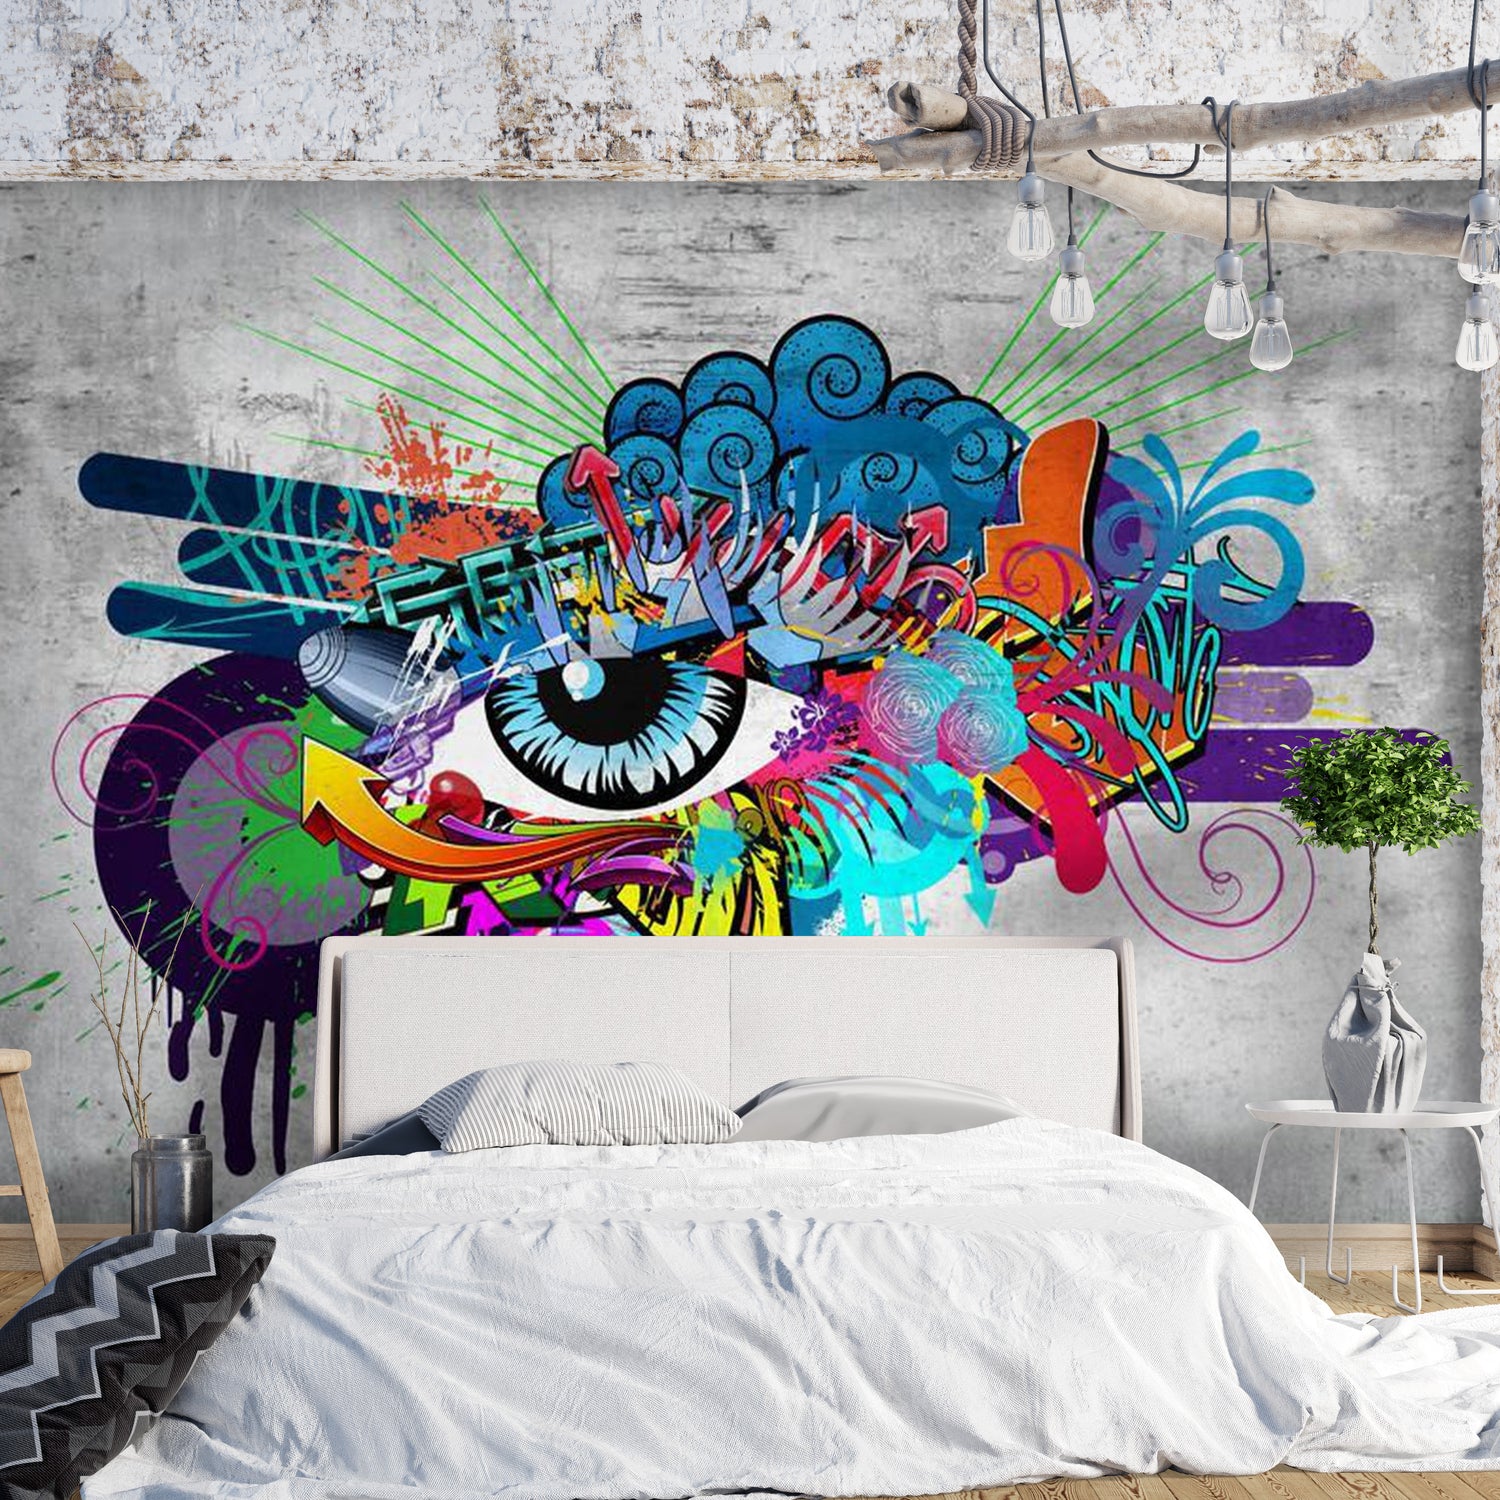 Peel & Stick Street Art Wall Mural - Graffiti Eye - Removable Wall Decals